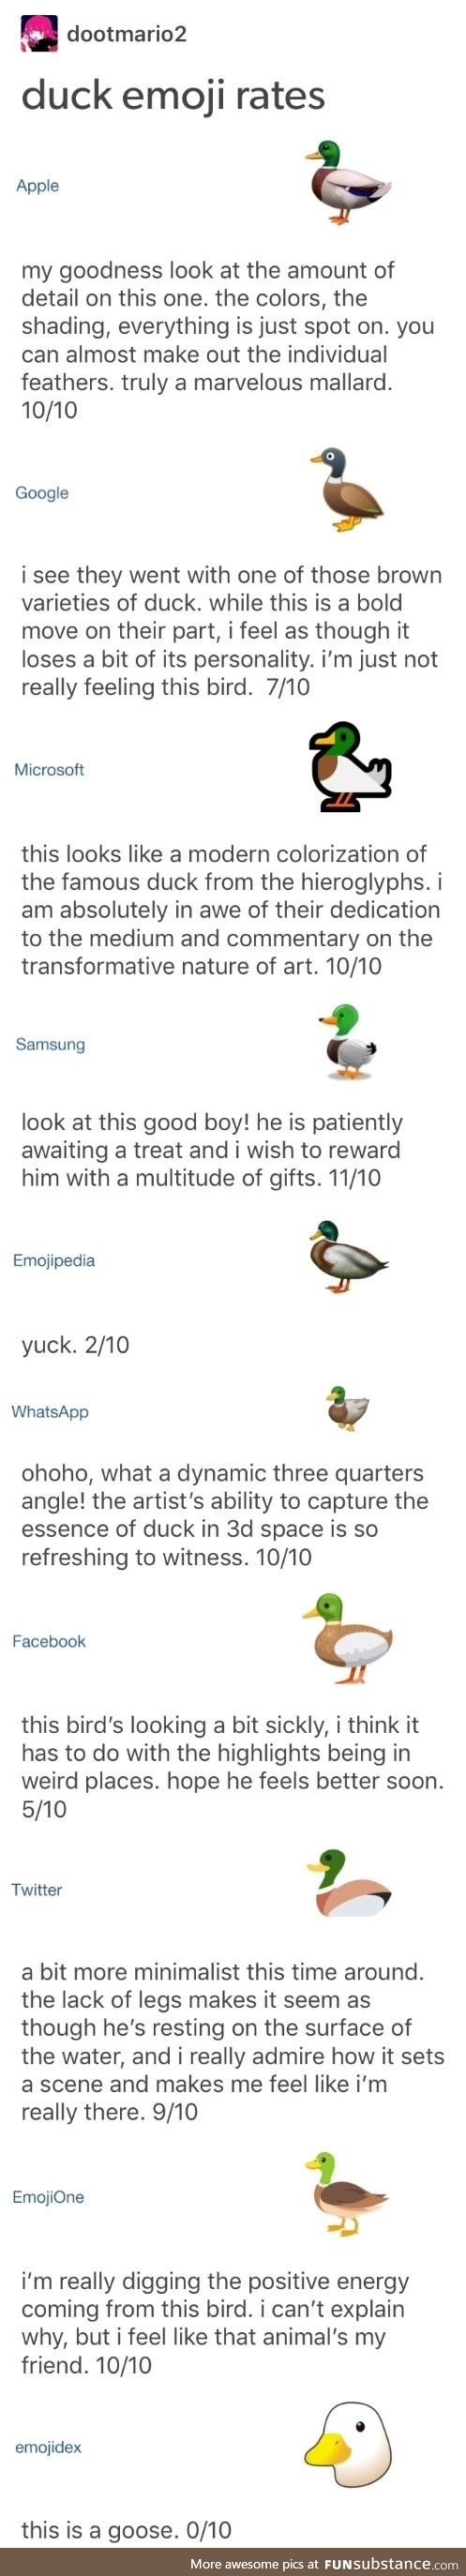 The internet of ducks